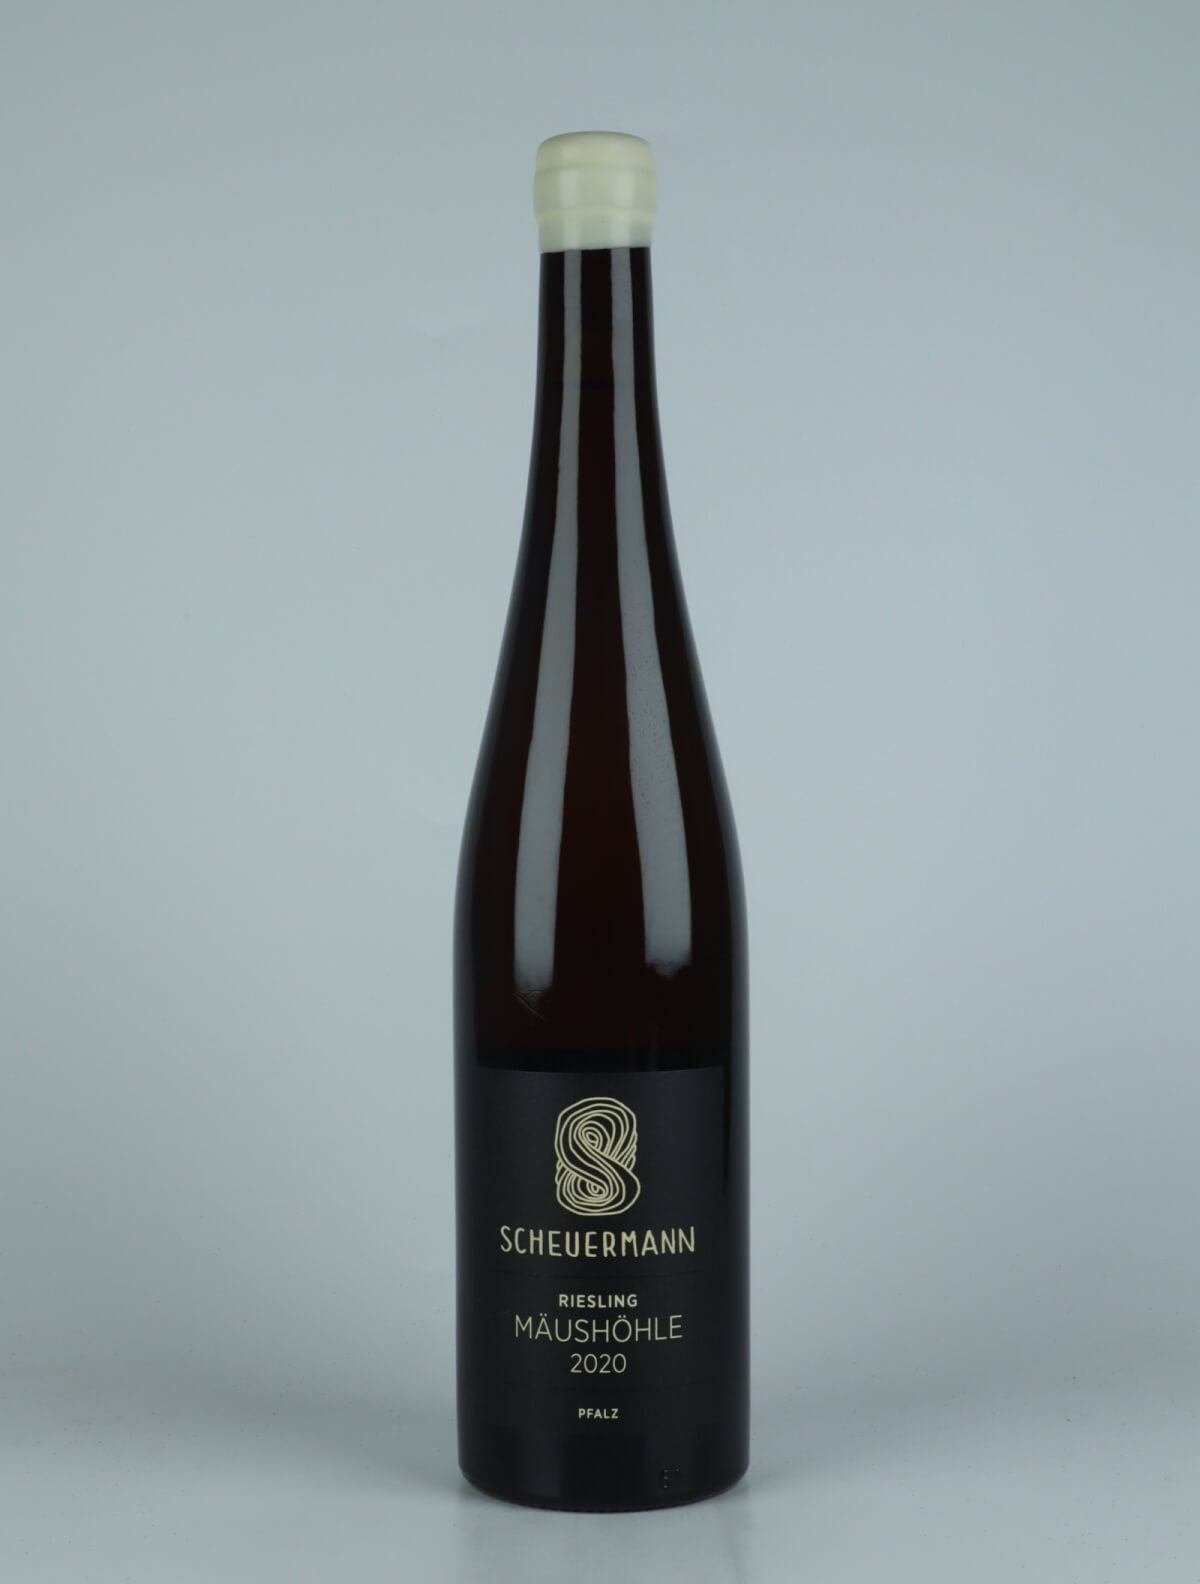 A bottle 2020 Riesling Mäushöhle White wine from Weingut Scheuermann, Pfalz in Germany